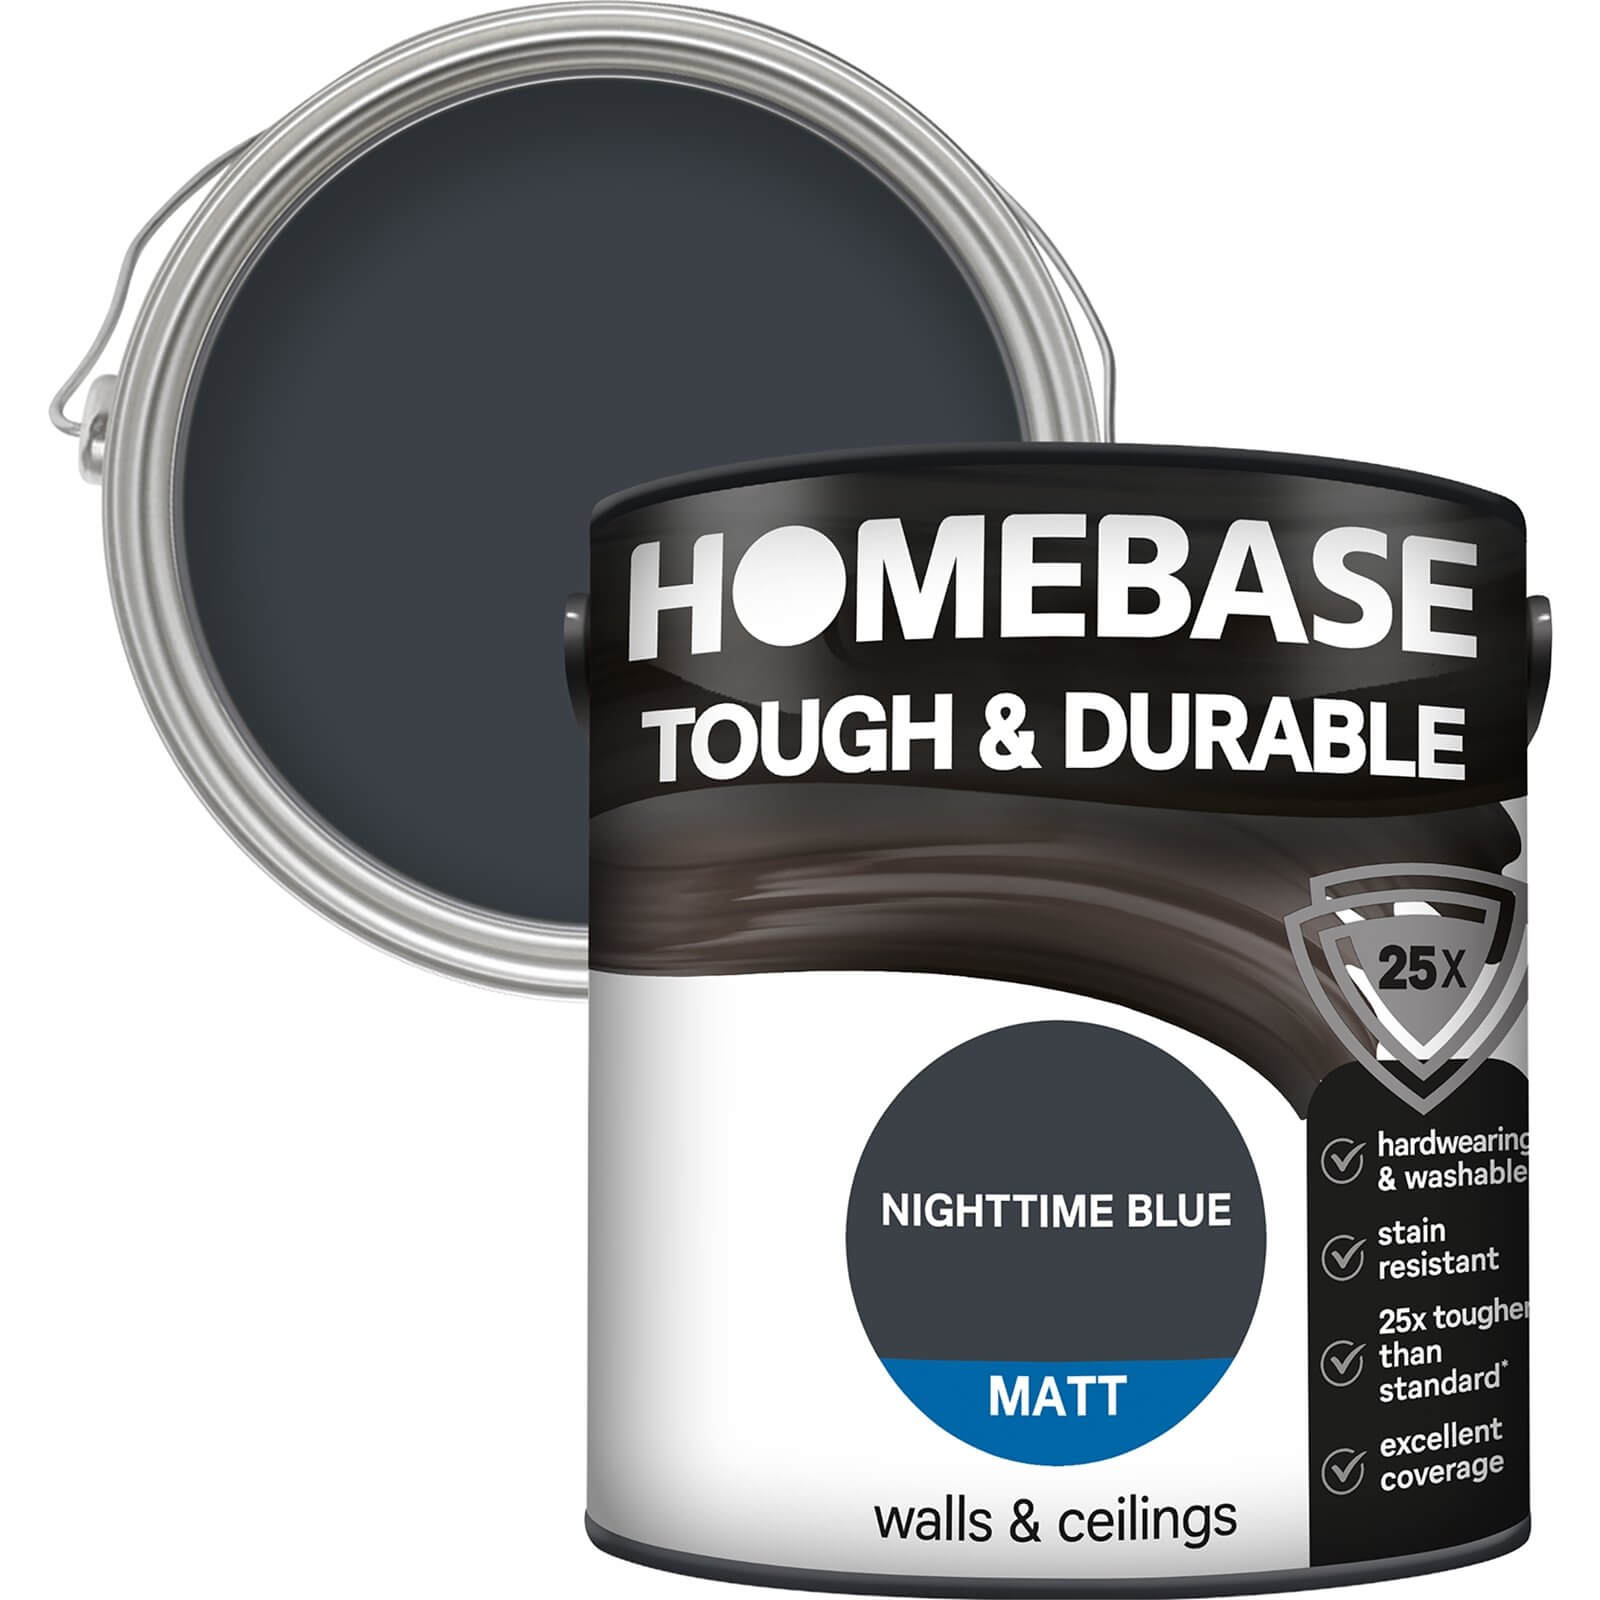 Homebase Tough & Durable Matt Paint Nighttime Blue - 2.5L